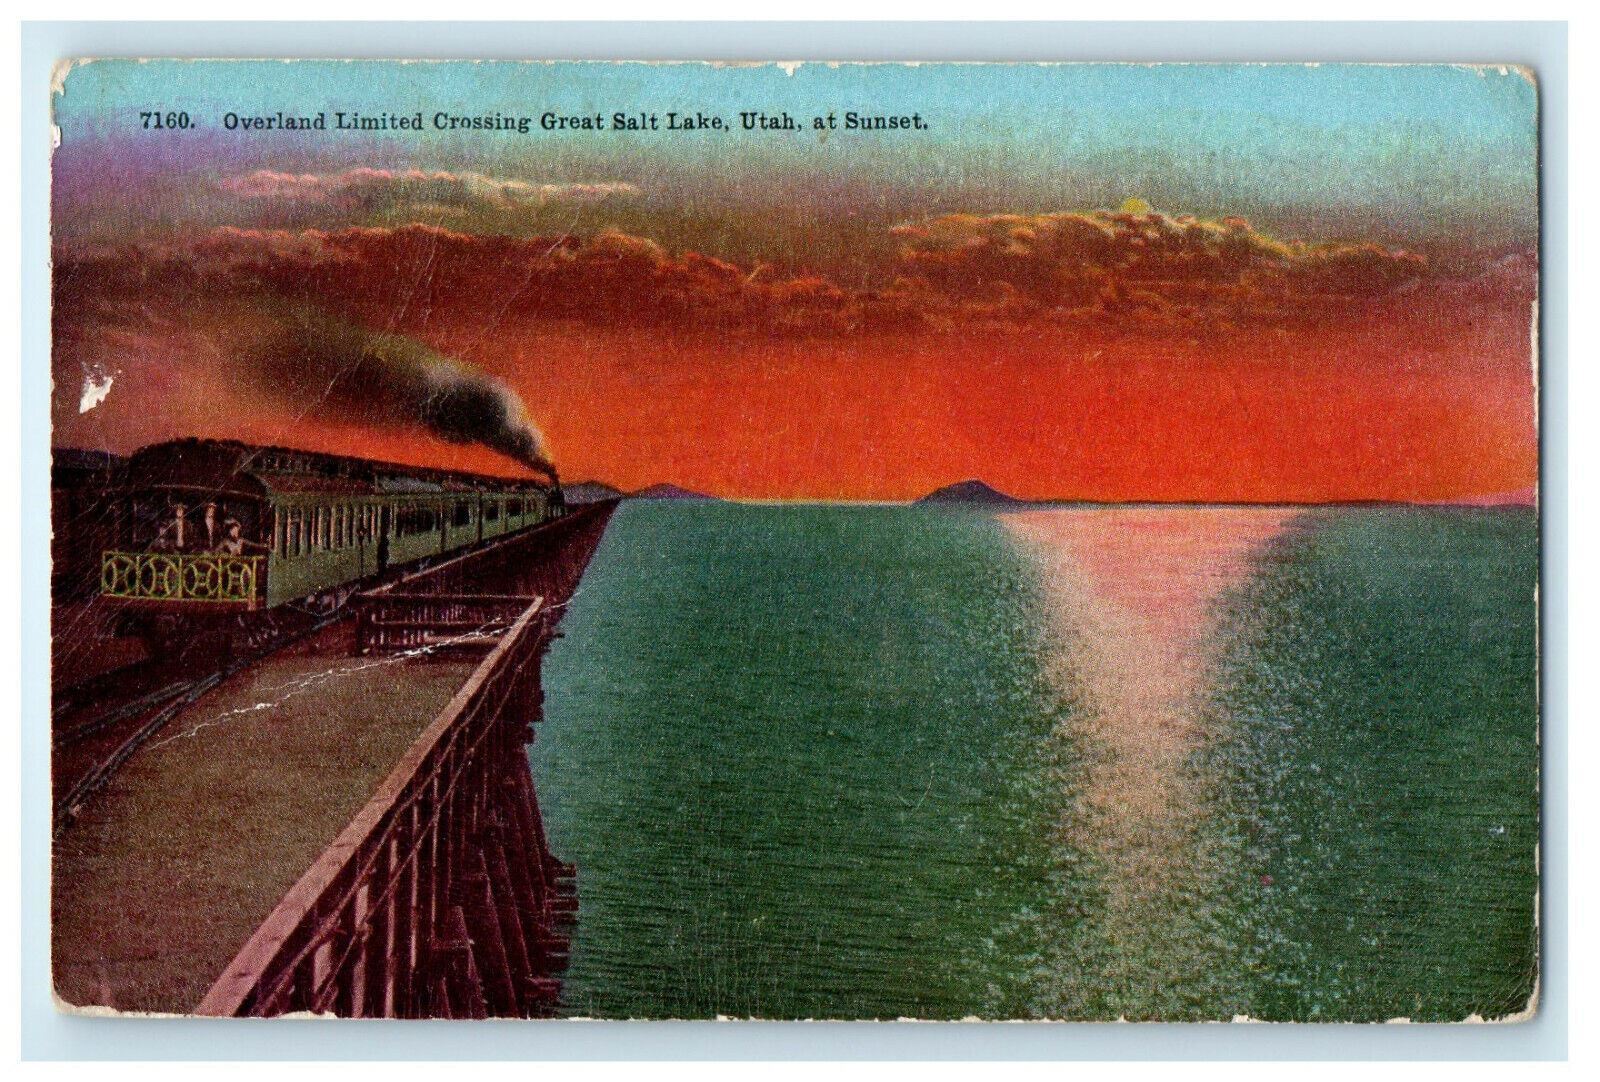 c1910s Train Locomotive in Ogden-Lucin Cut-Off Utah UT Posted Sunset Postcard